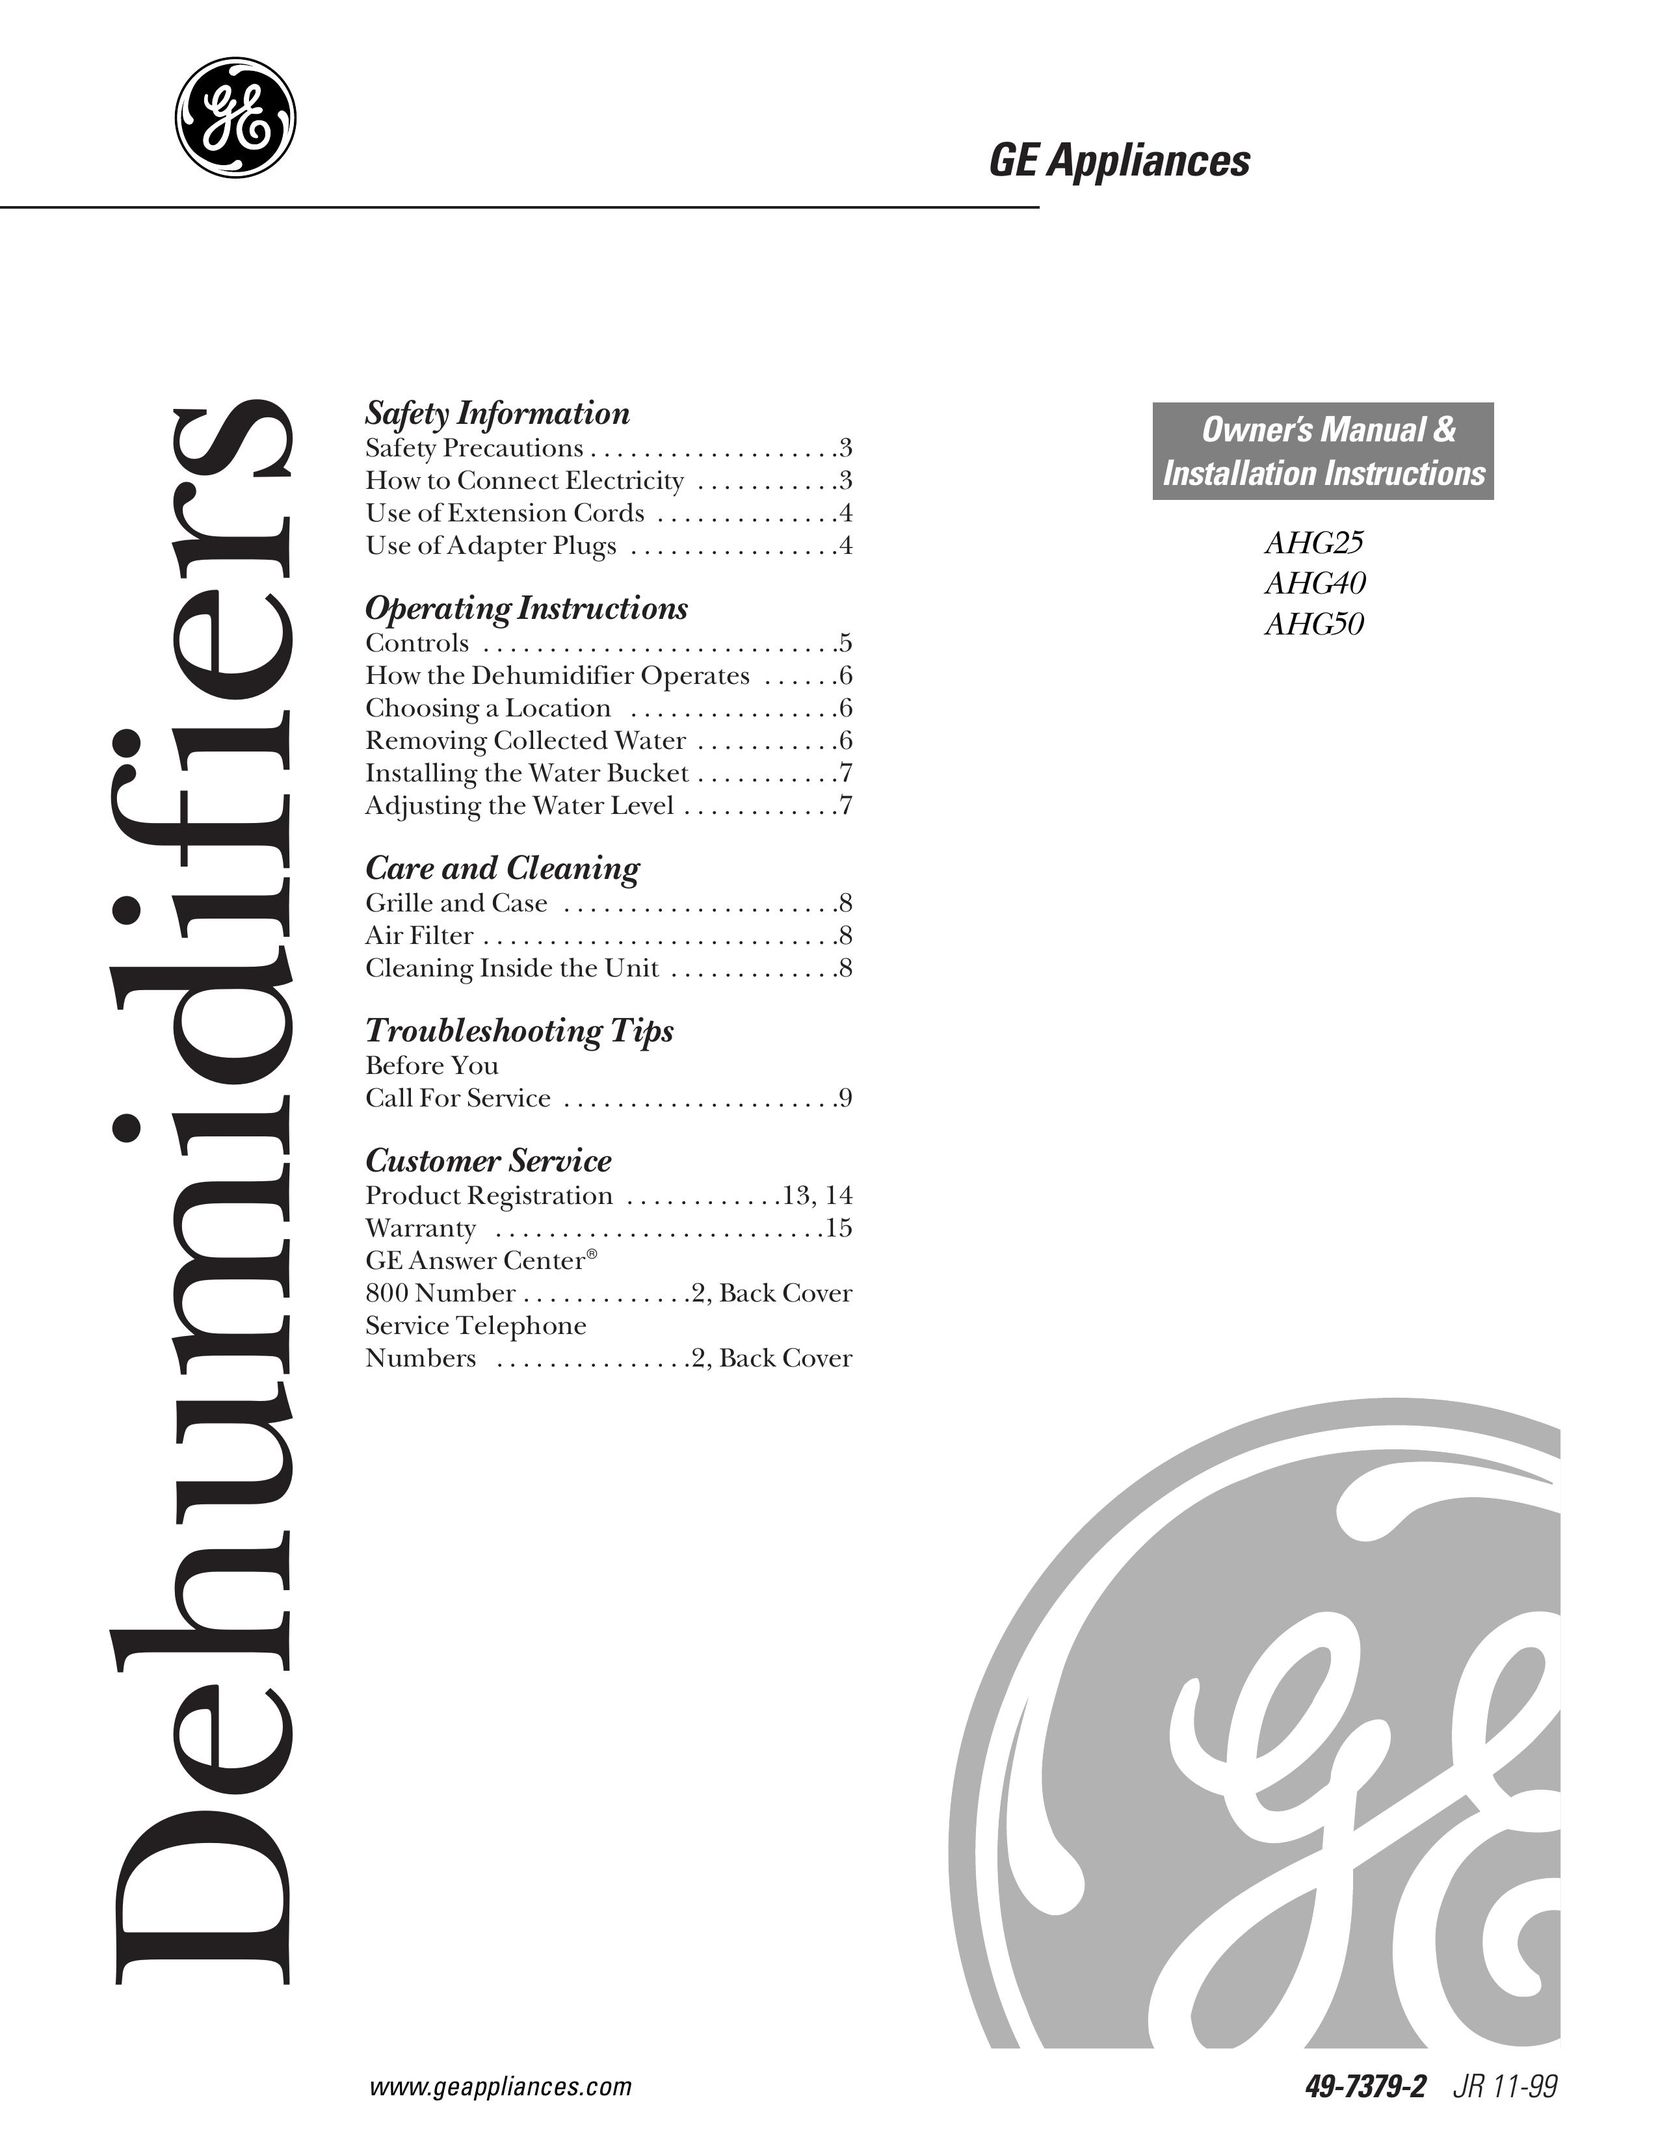 GE AHG50 Dehumidifier User Manual